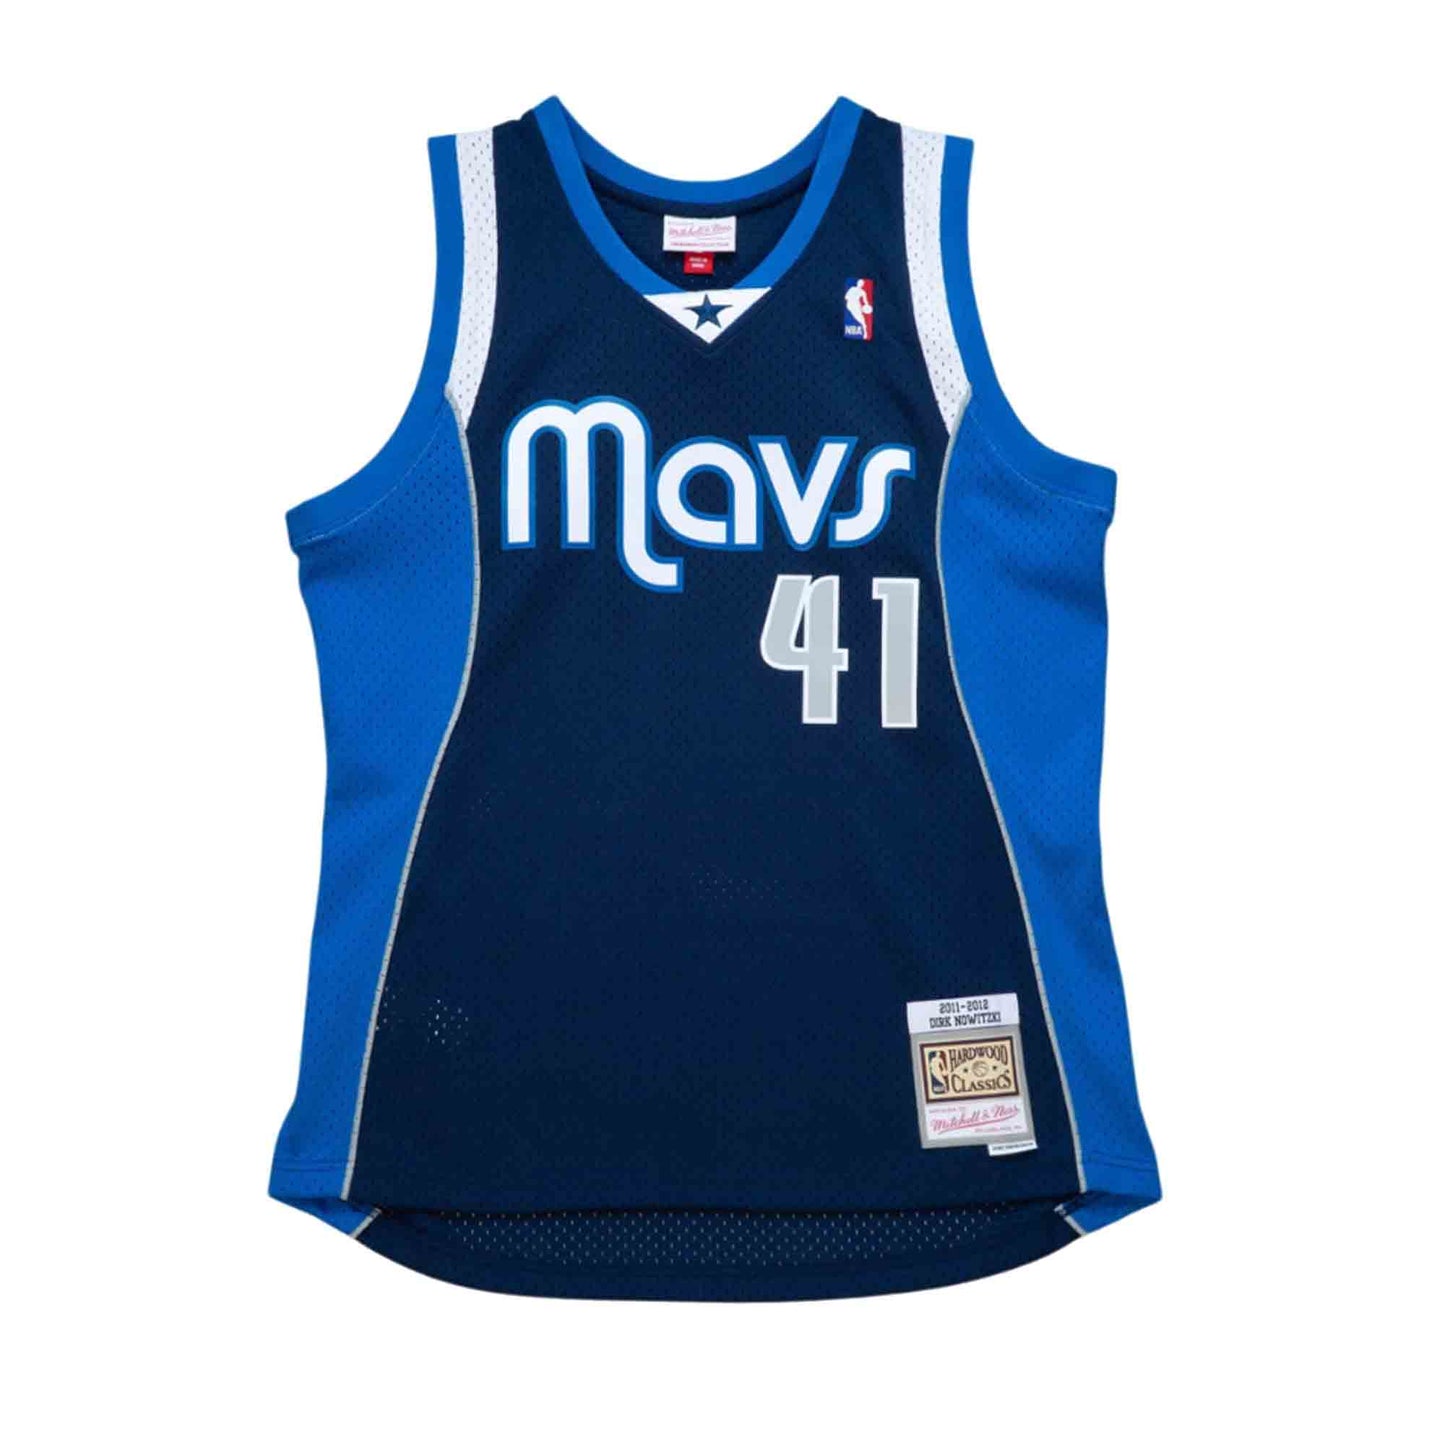 NBA Swingman Jersey Dallas Mavericks 2011-12 Dirk Nowitzki #41